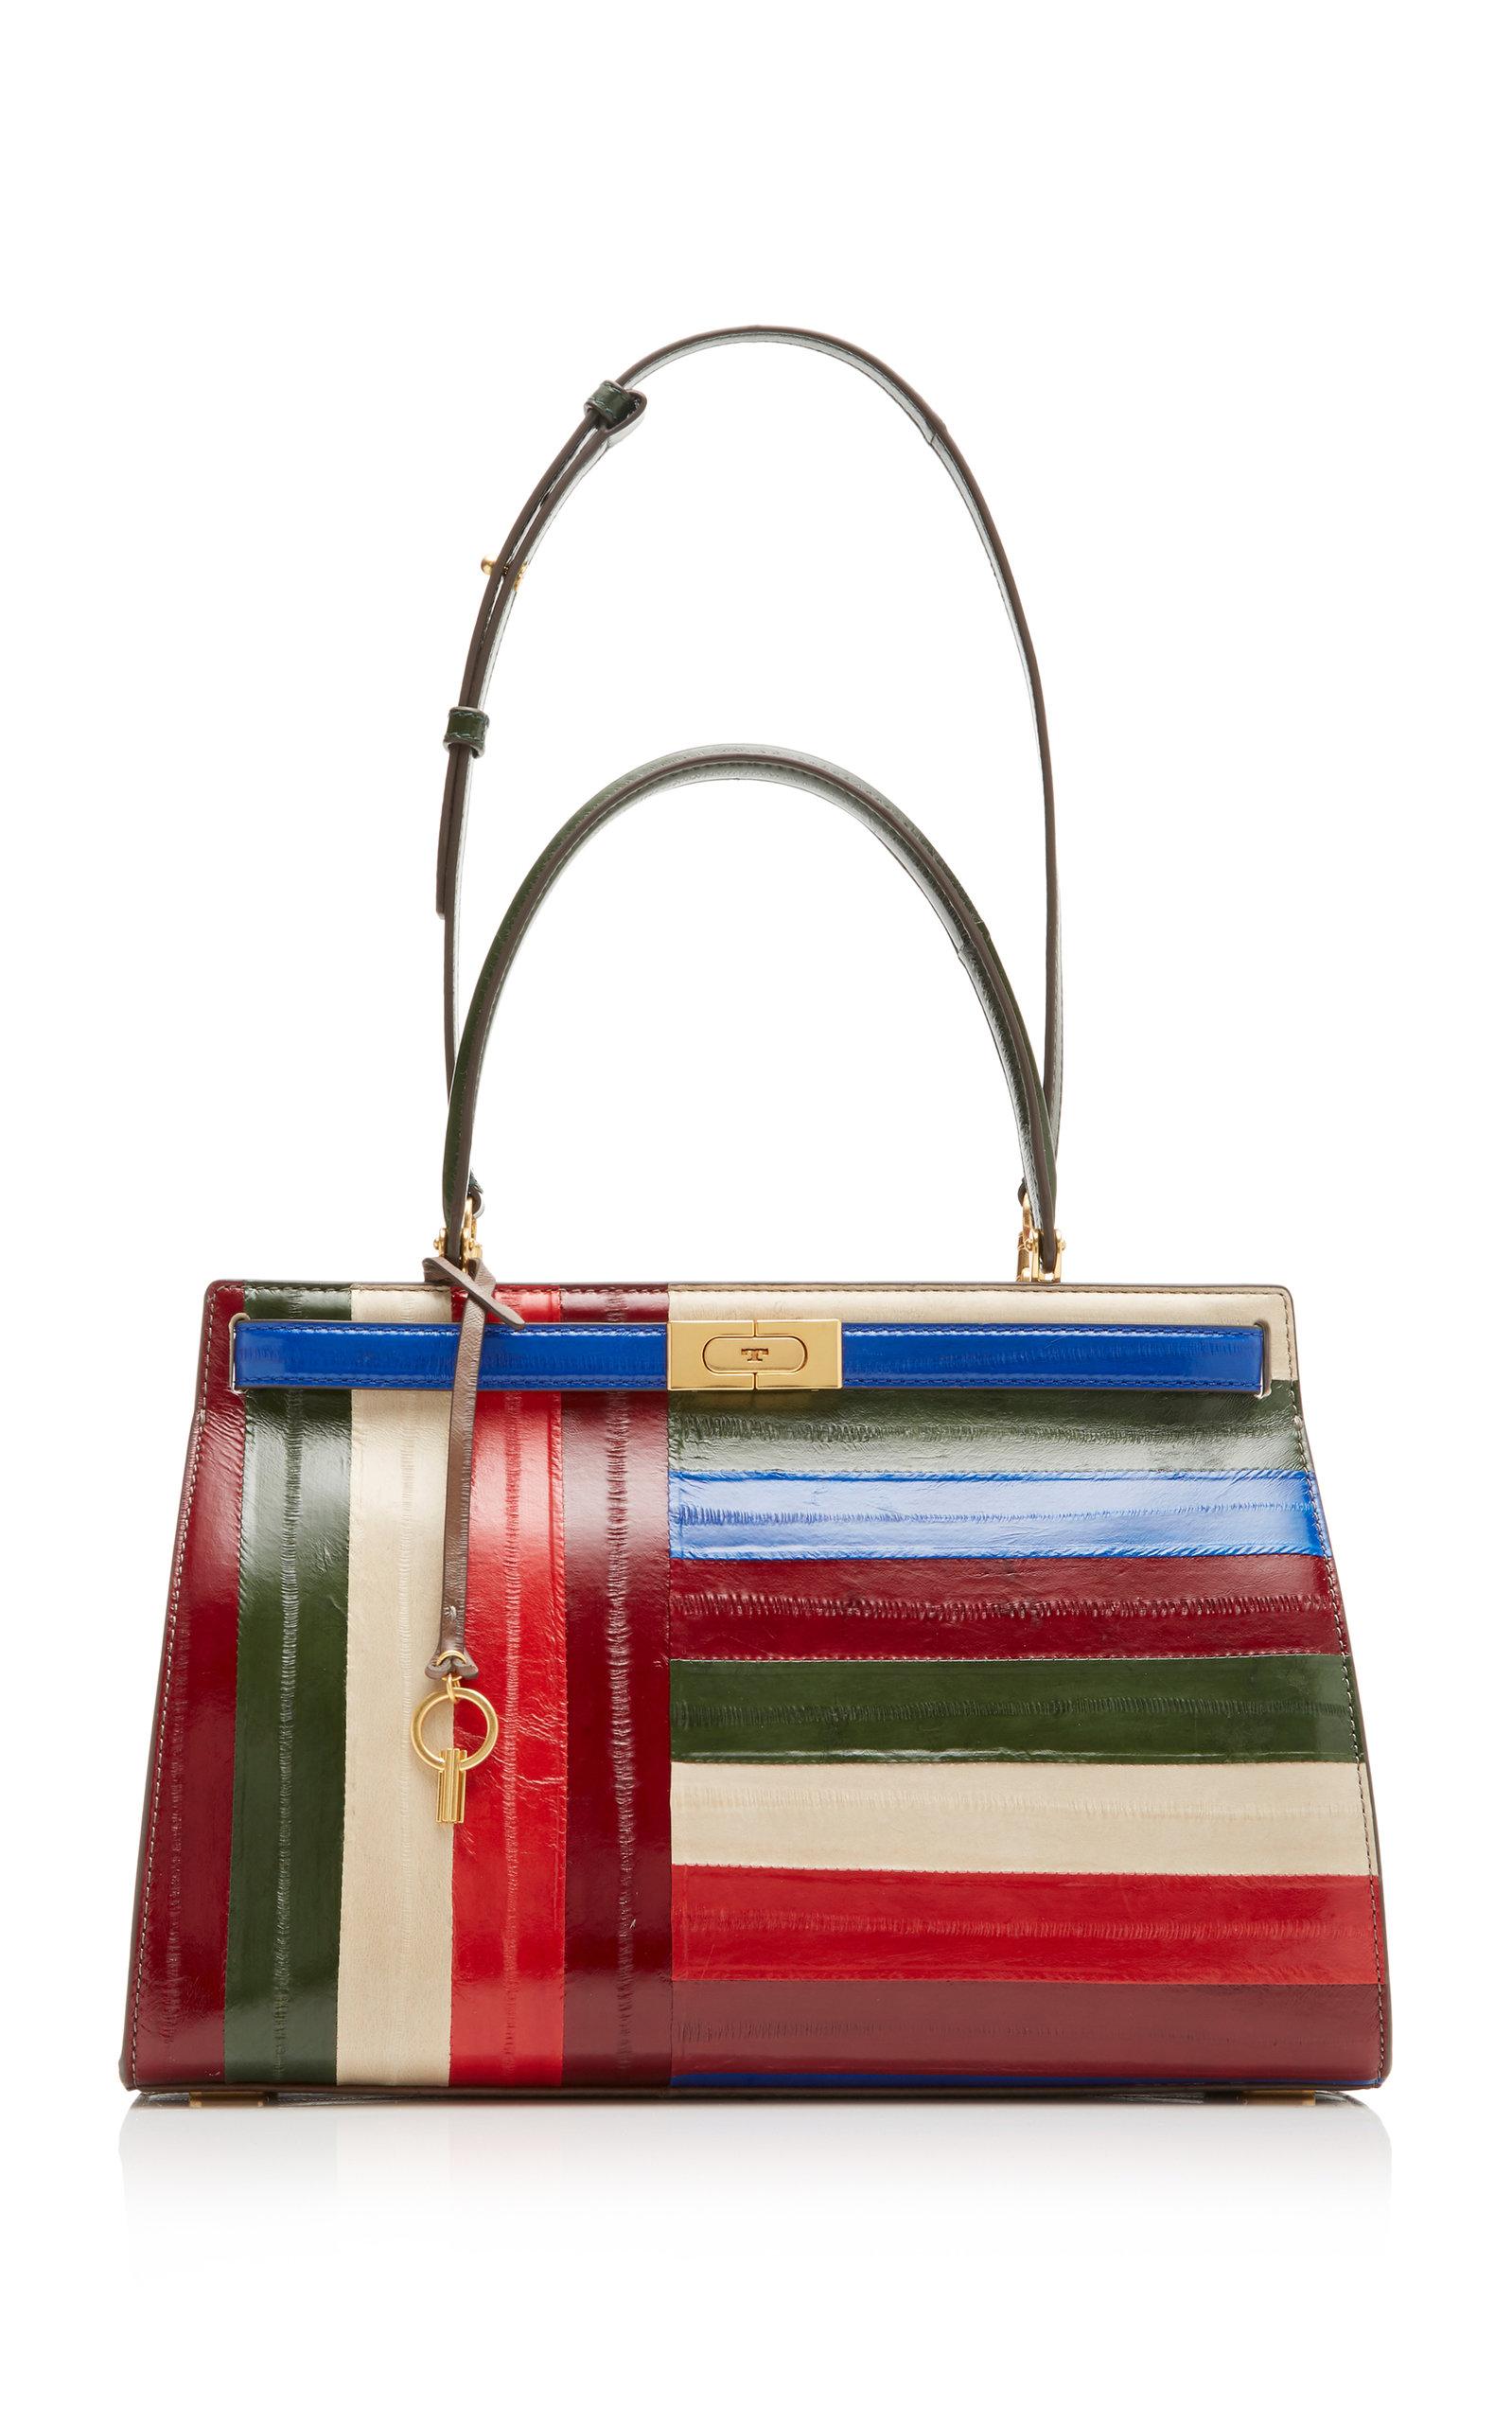 Lee Radziwill Small Double Bag: Women's Handbags, Satchels